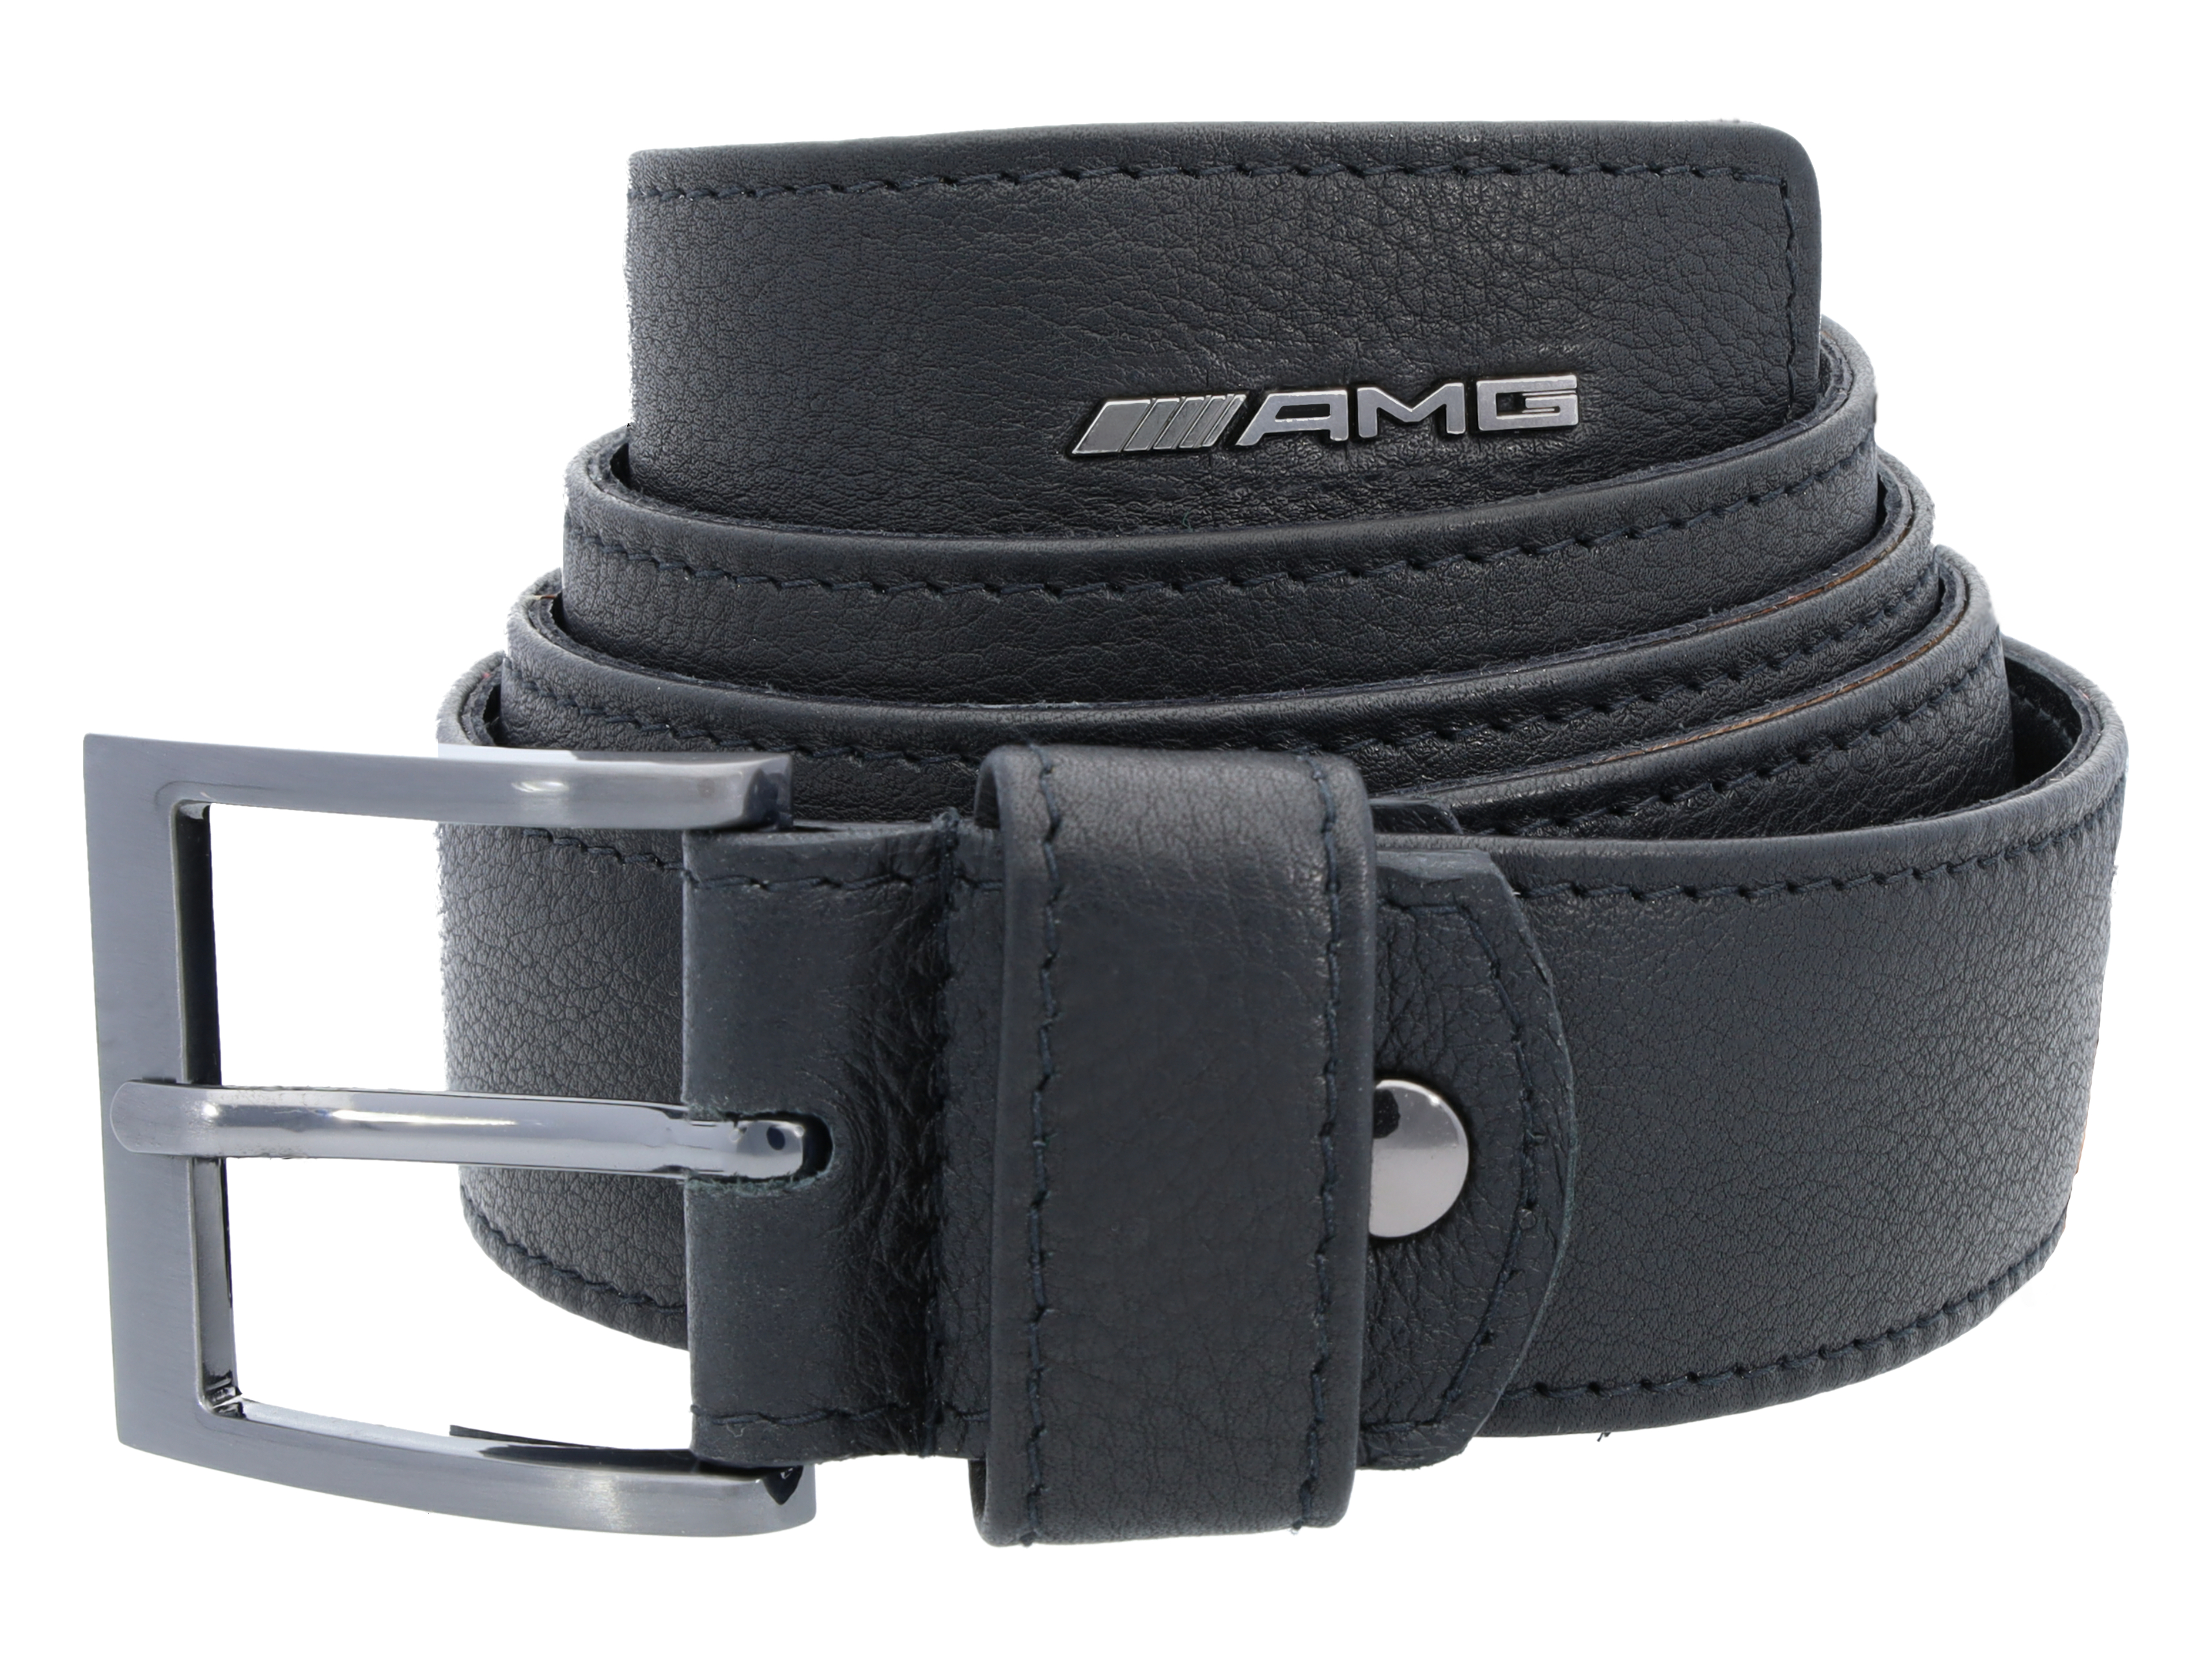 AMG Gürtel - schwarz, Rindleder